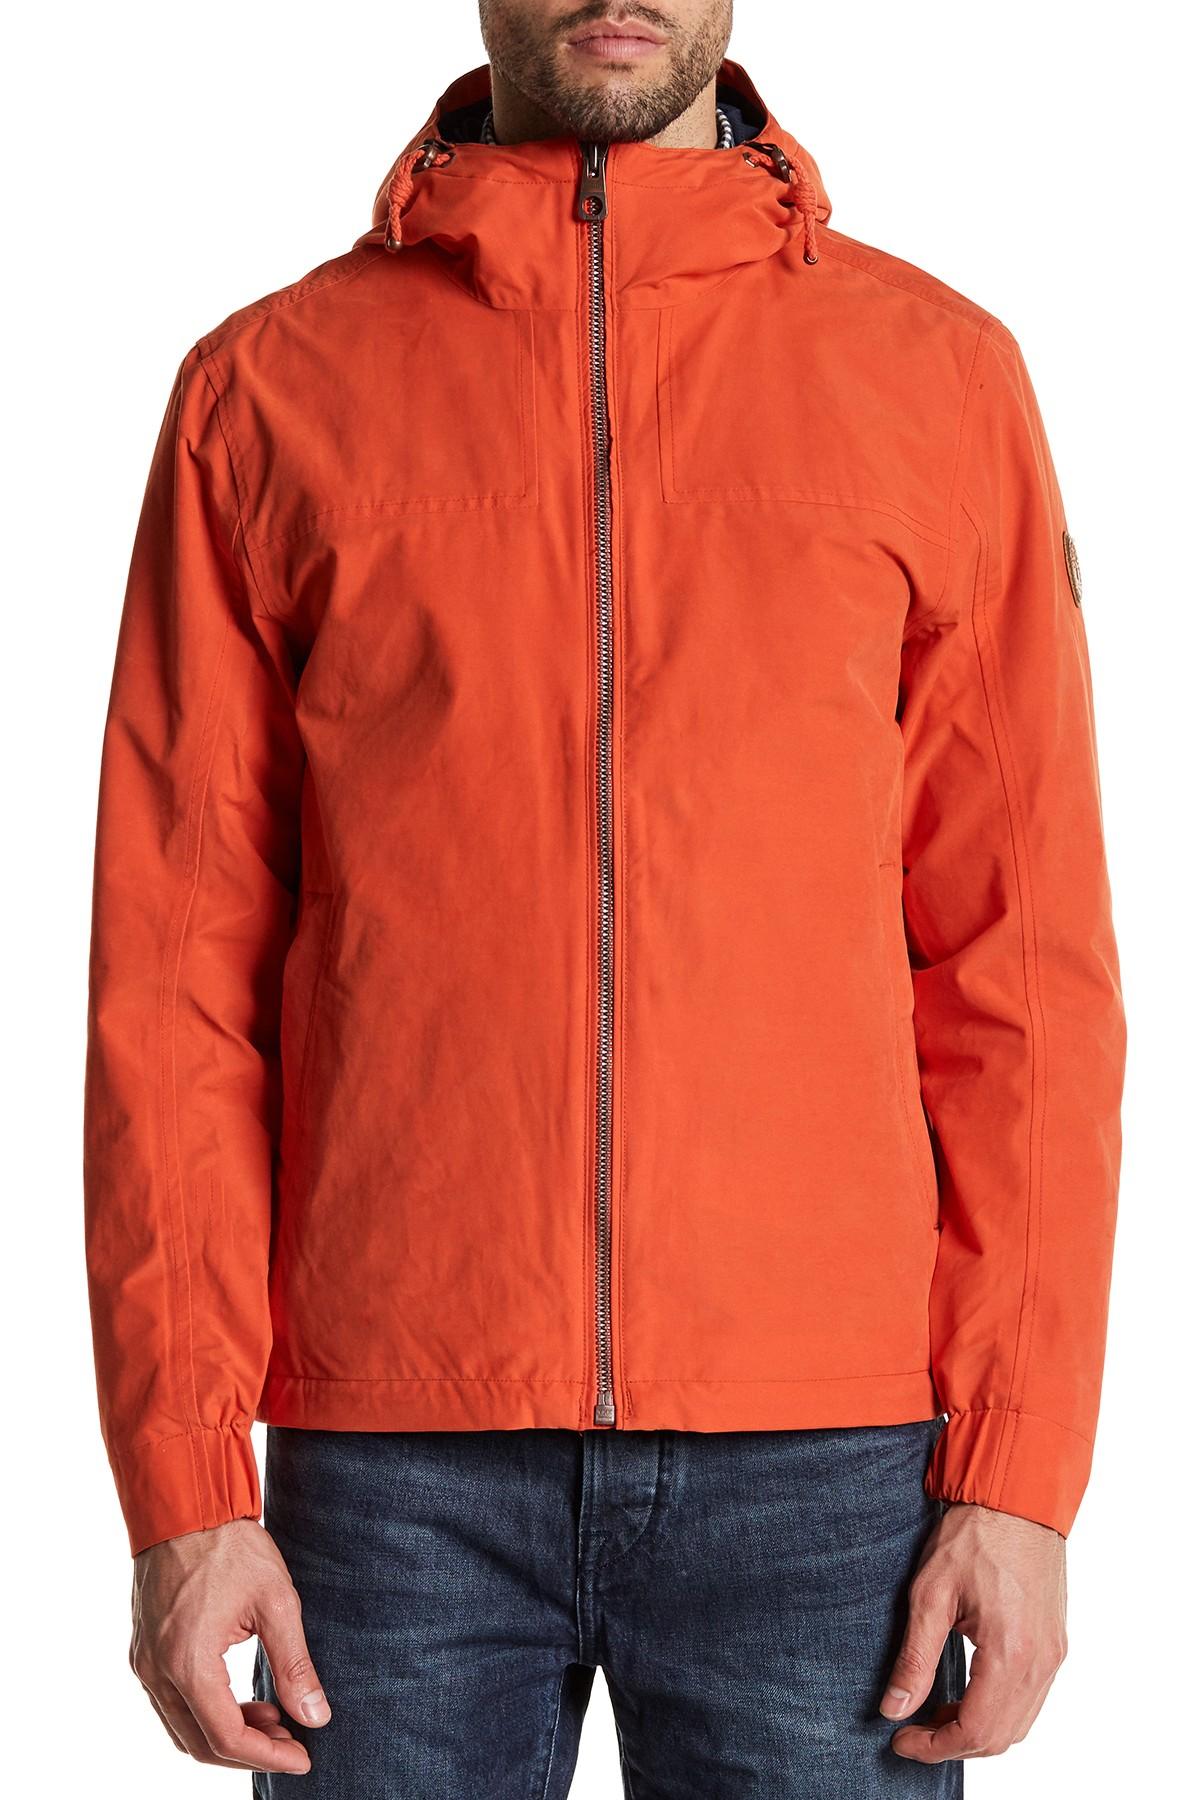 Lyst - Timberland Rugged Lightweight Jacket in Orange for Men